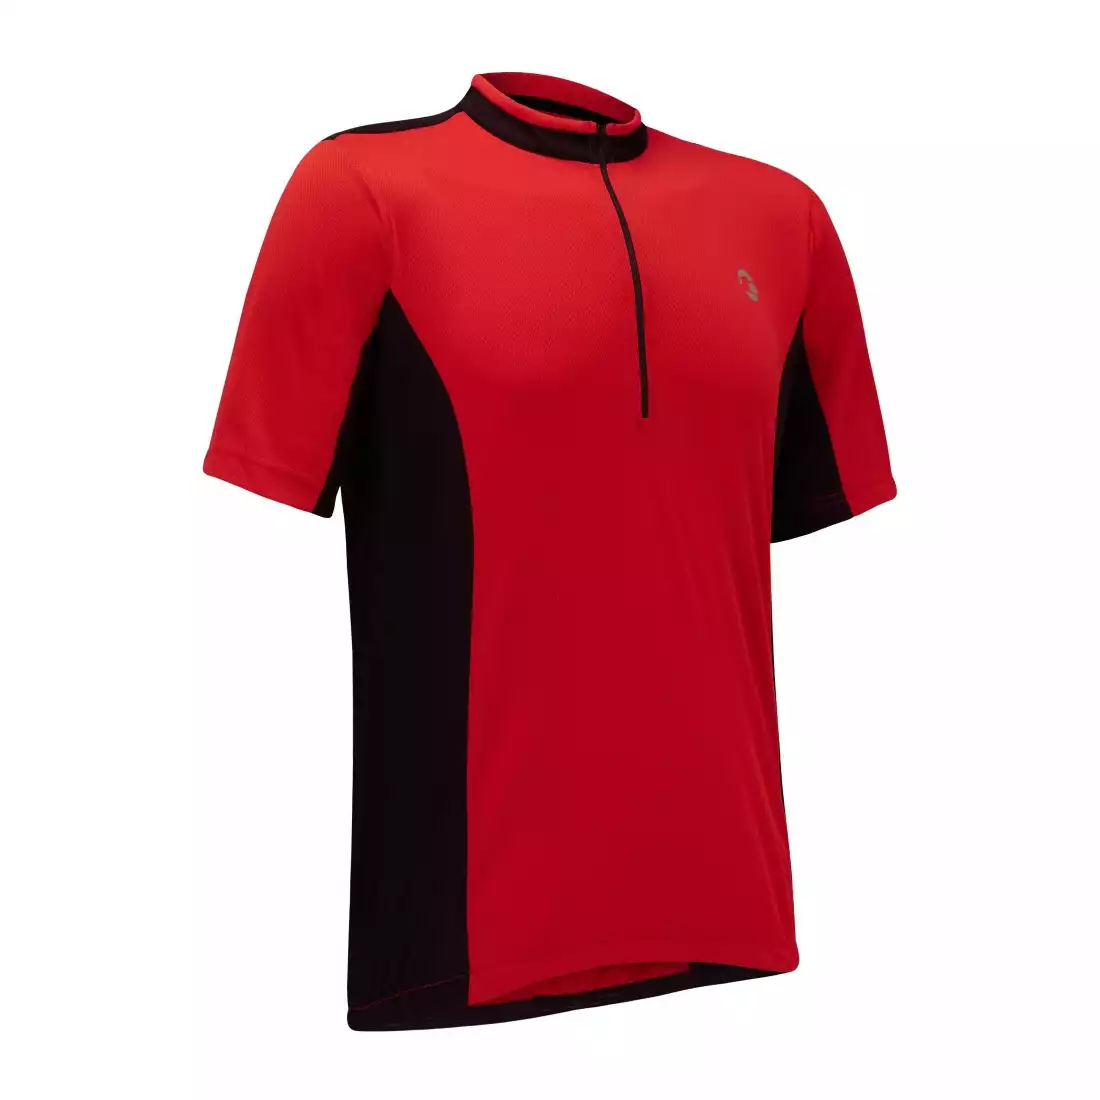 TENN OUTDOORS COOLFLO męska koszulka rowerowa czerwono-czarna